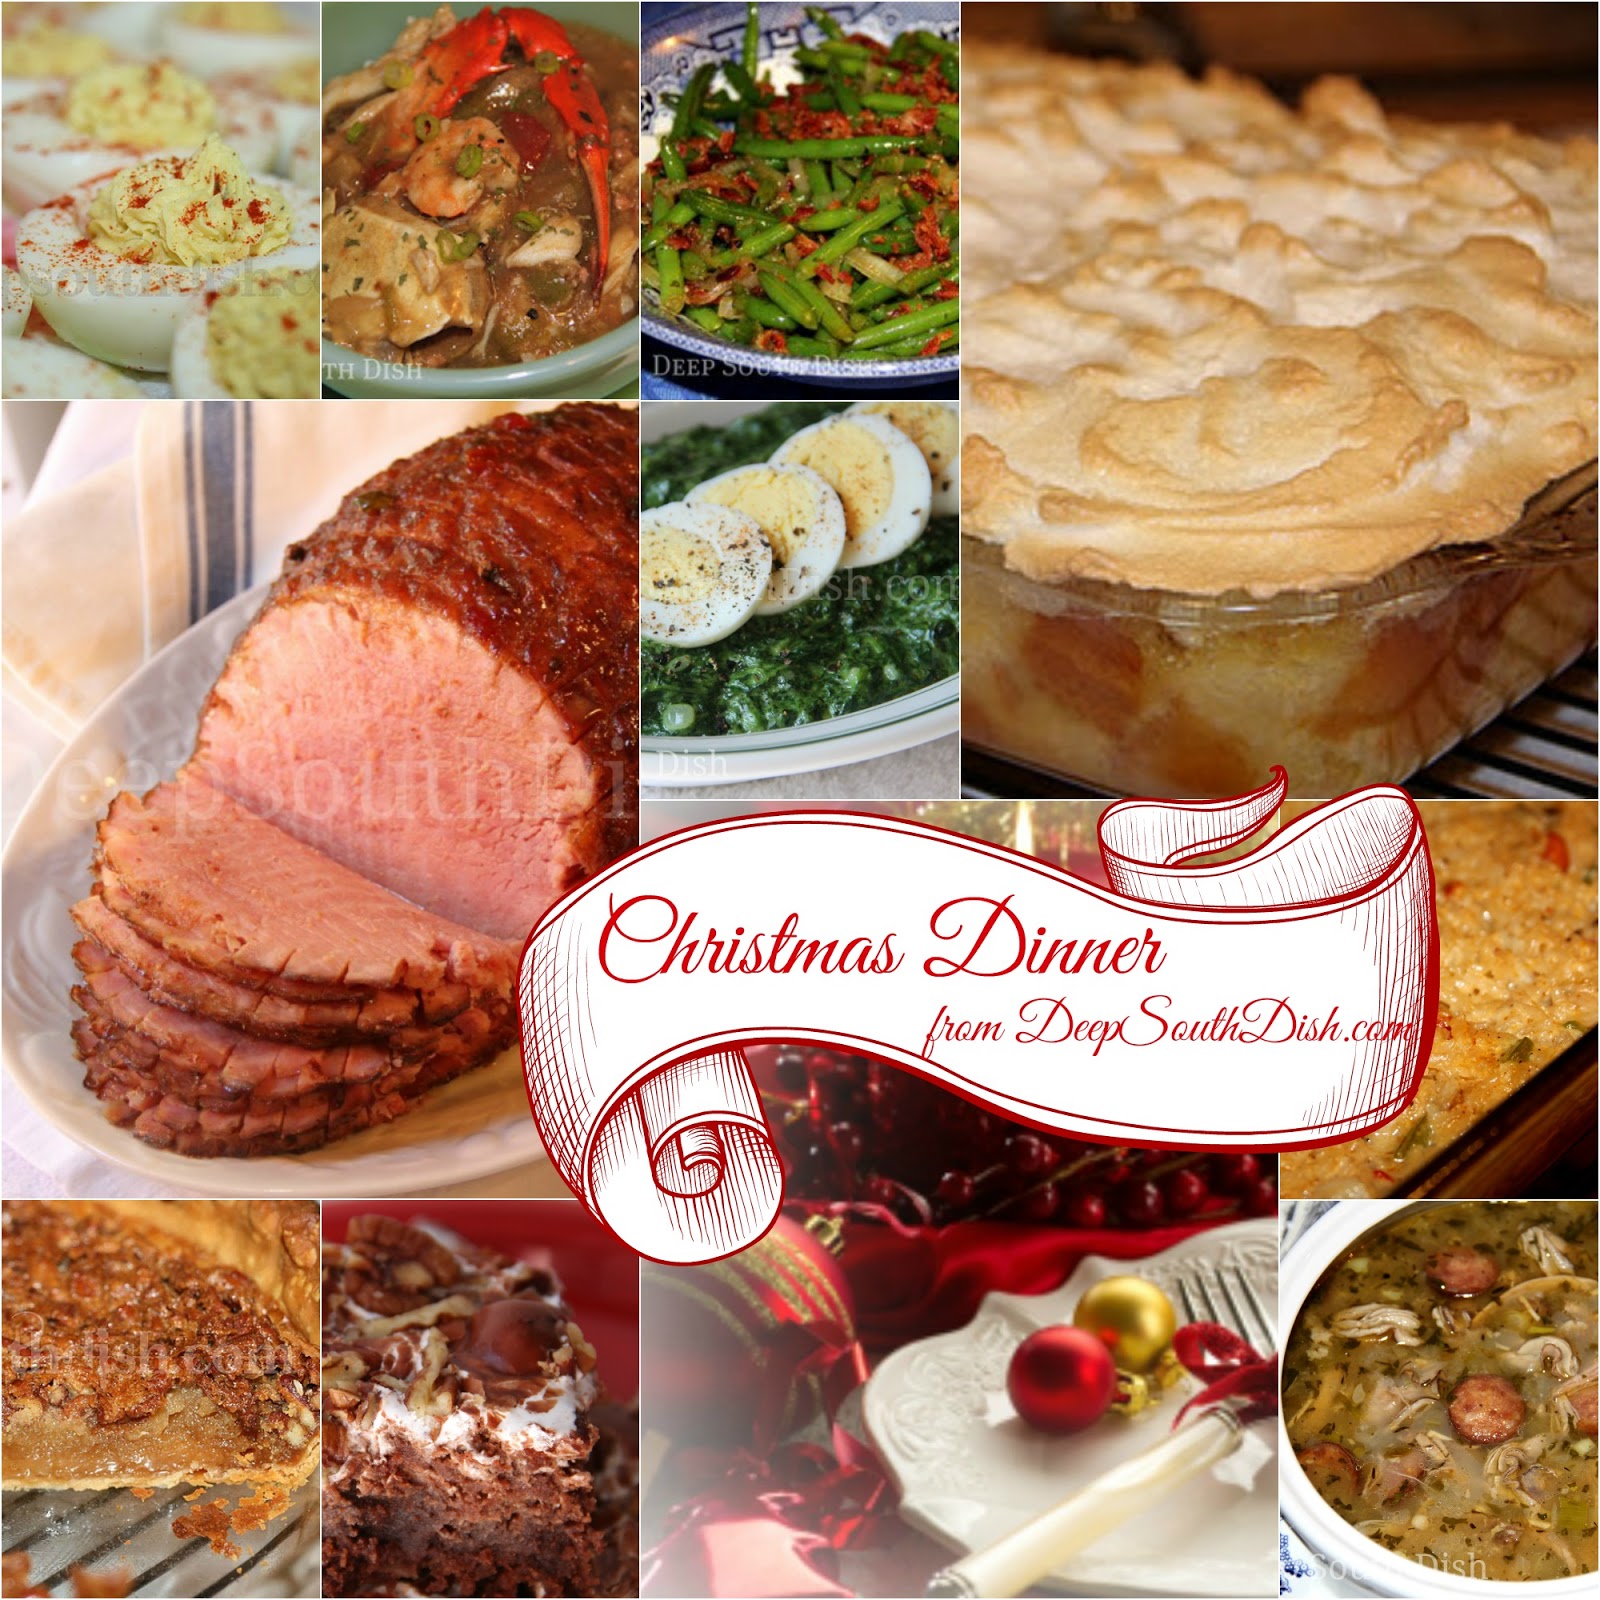 Deep South Dish Southern Christmas Dinner Menu And Recipe Ideas